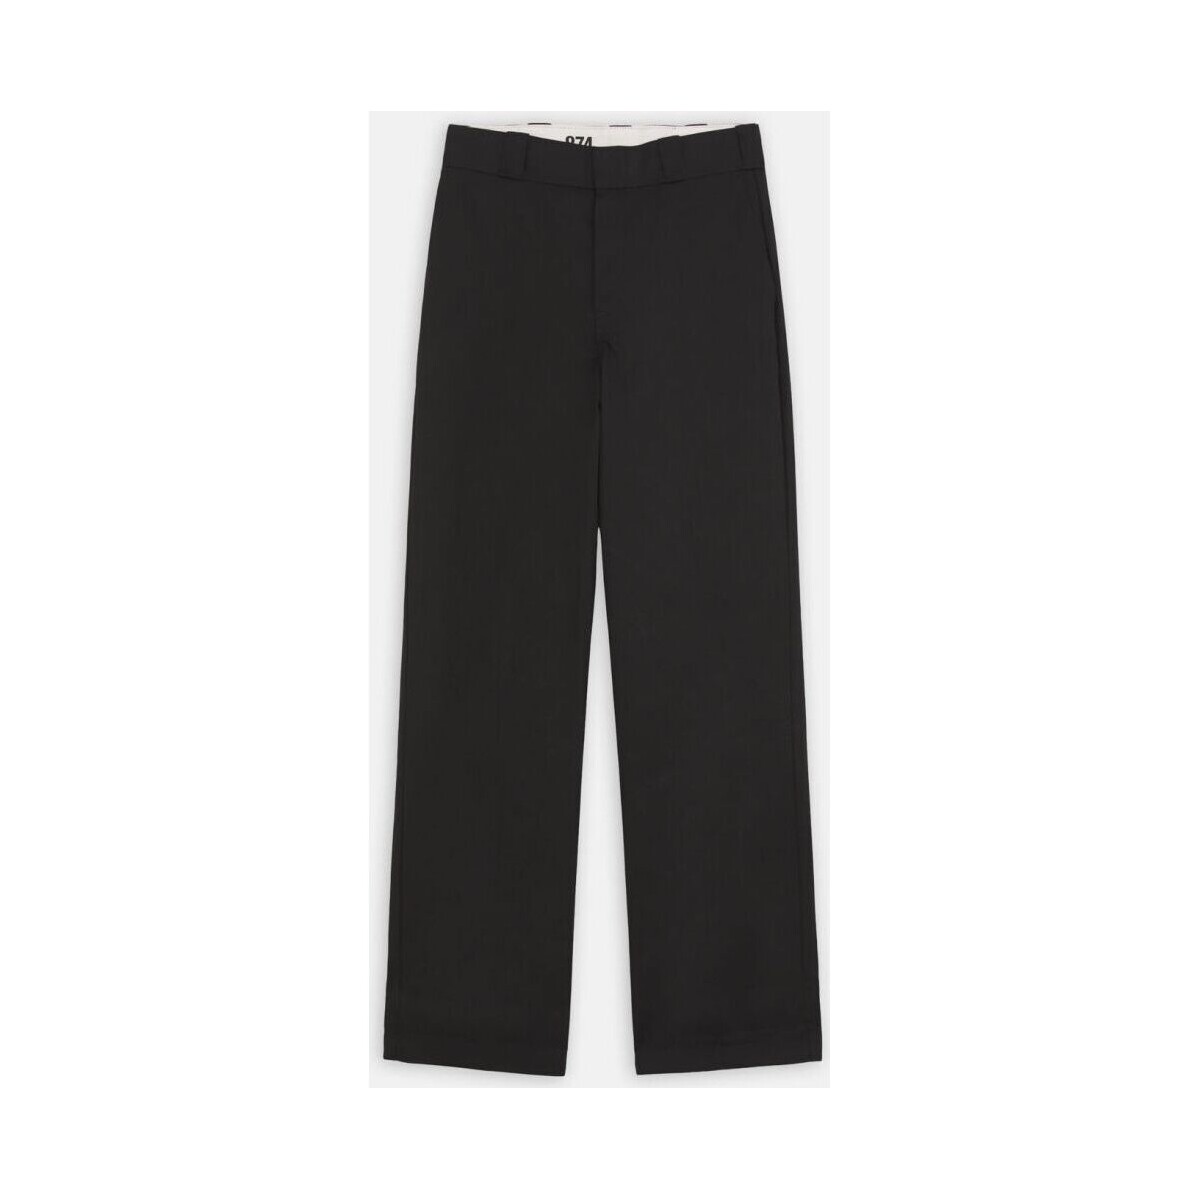 Vêtements Femme Pantalons Dickies 874 WORK PANT W - DK0A4YH1-BLK BLACK Noir